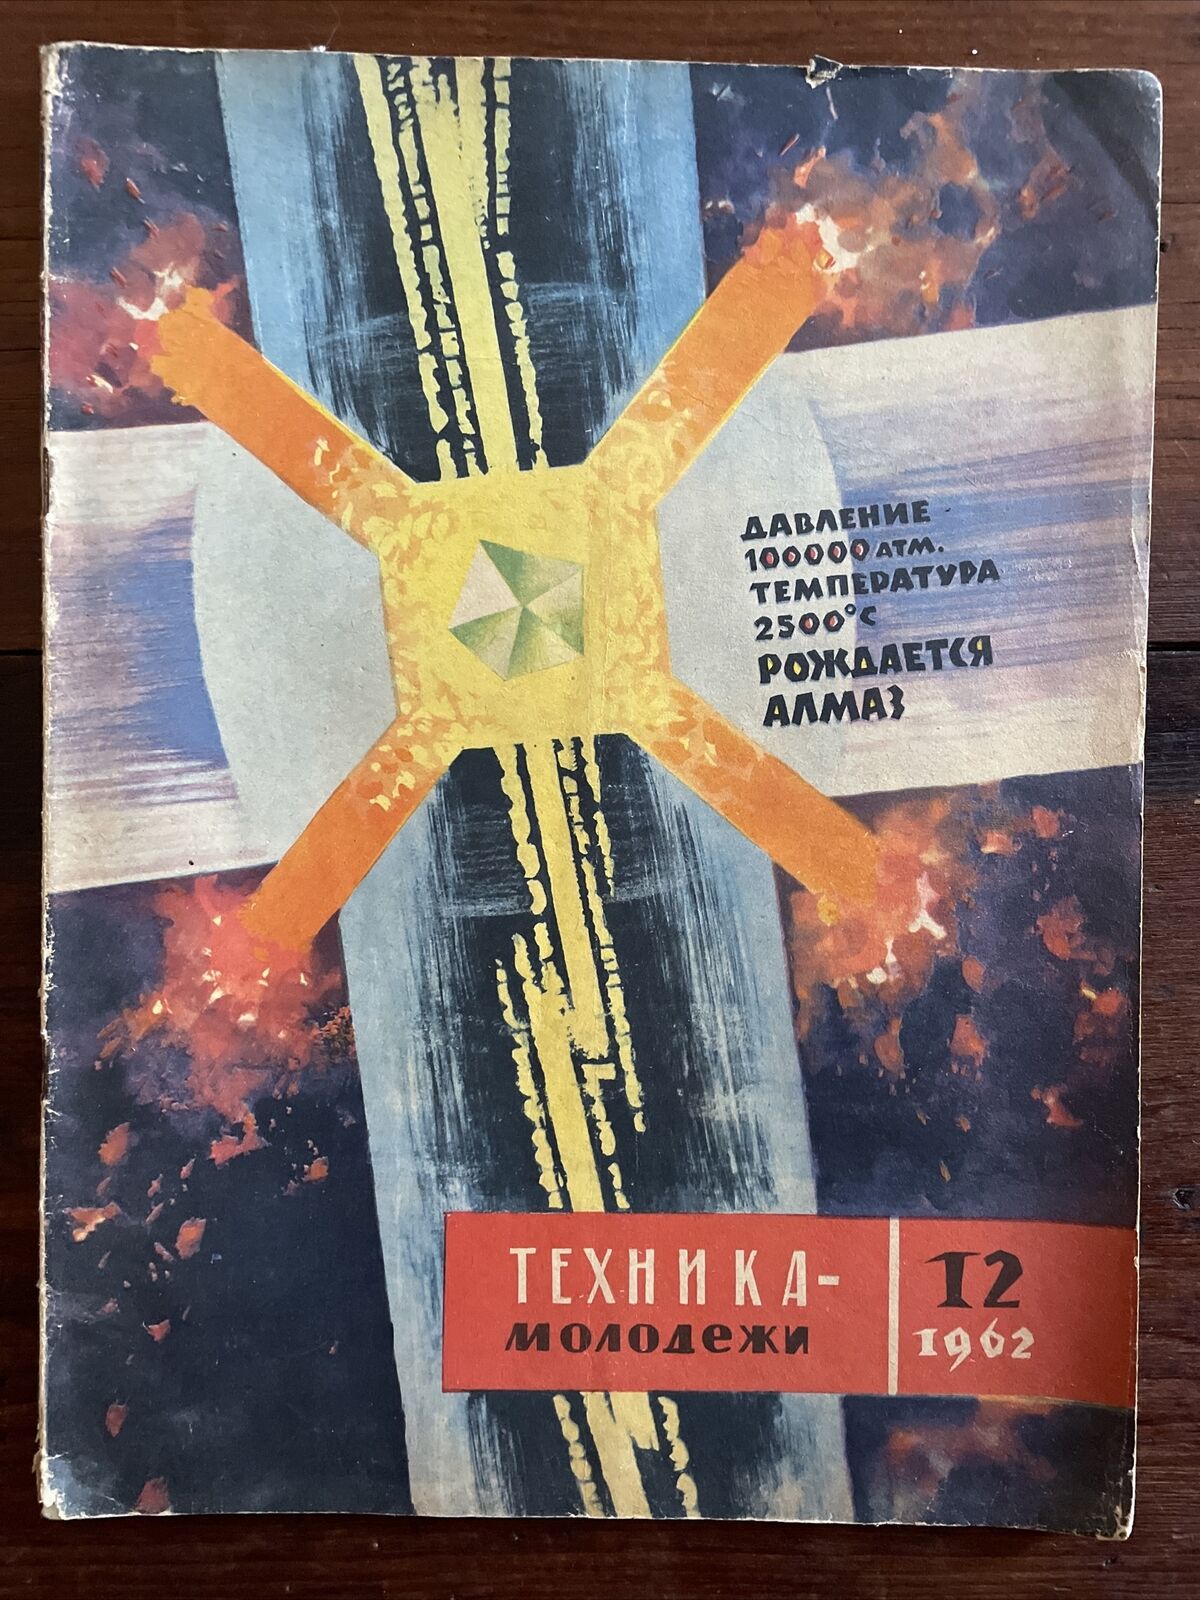 1962 Soviet USSR TECHNICA MOLODEZHI Space Science & Technology Magazine Dec